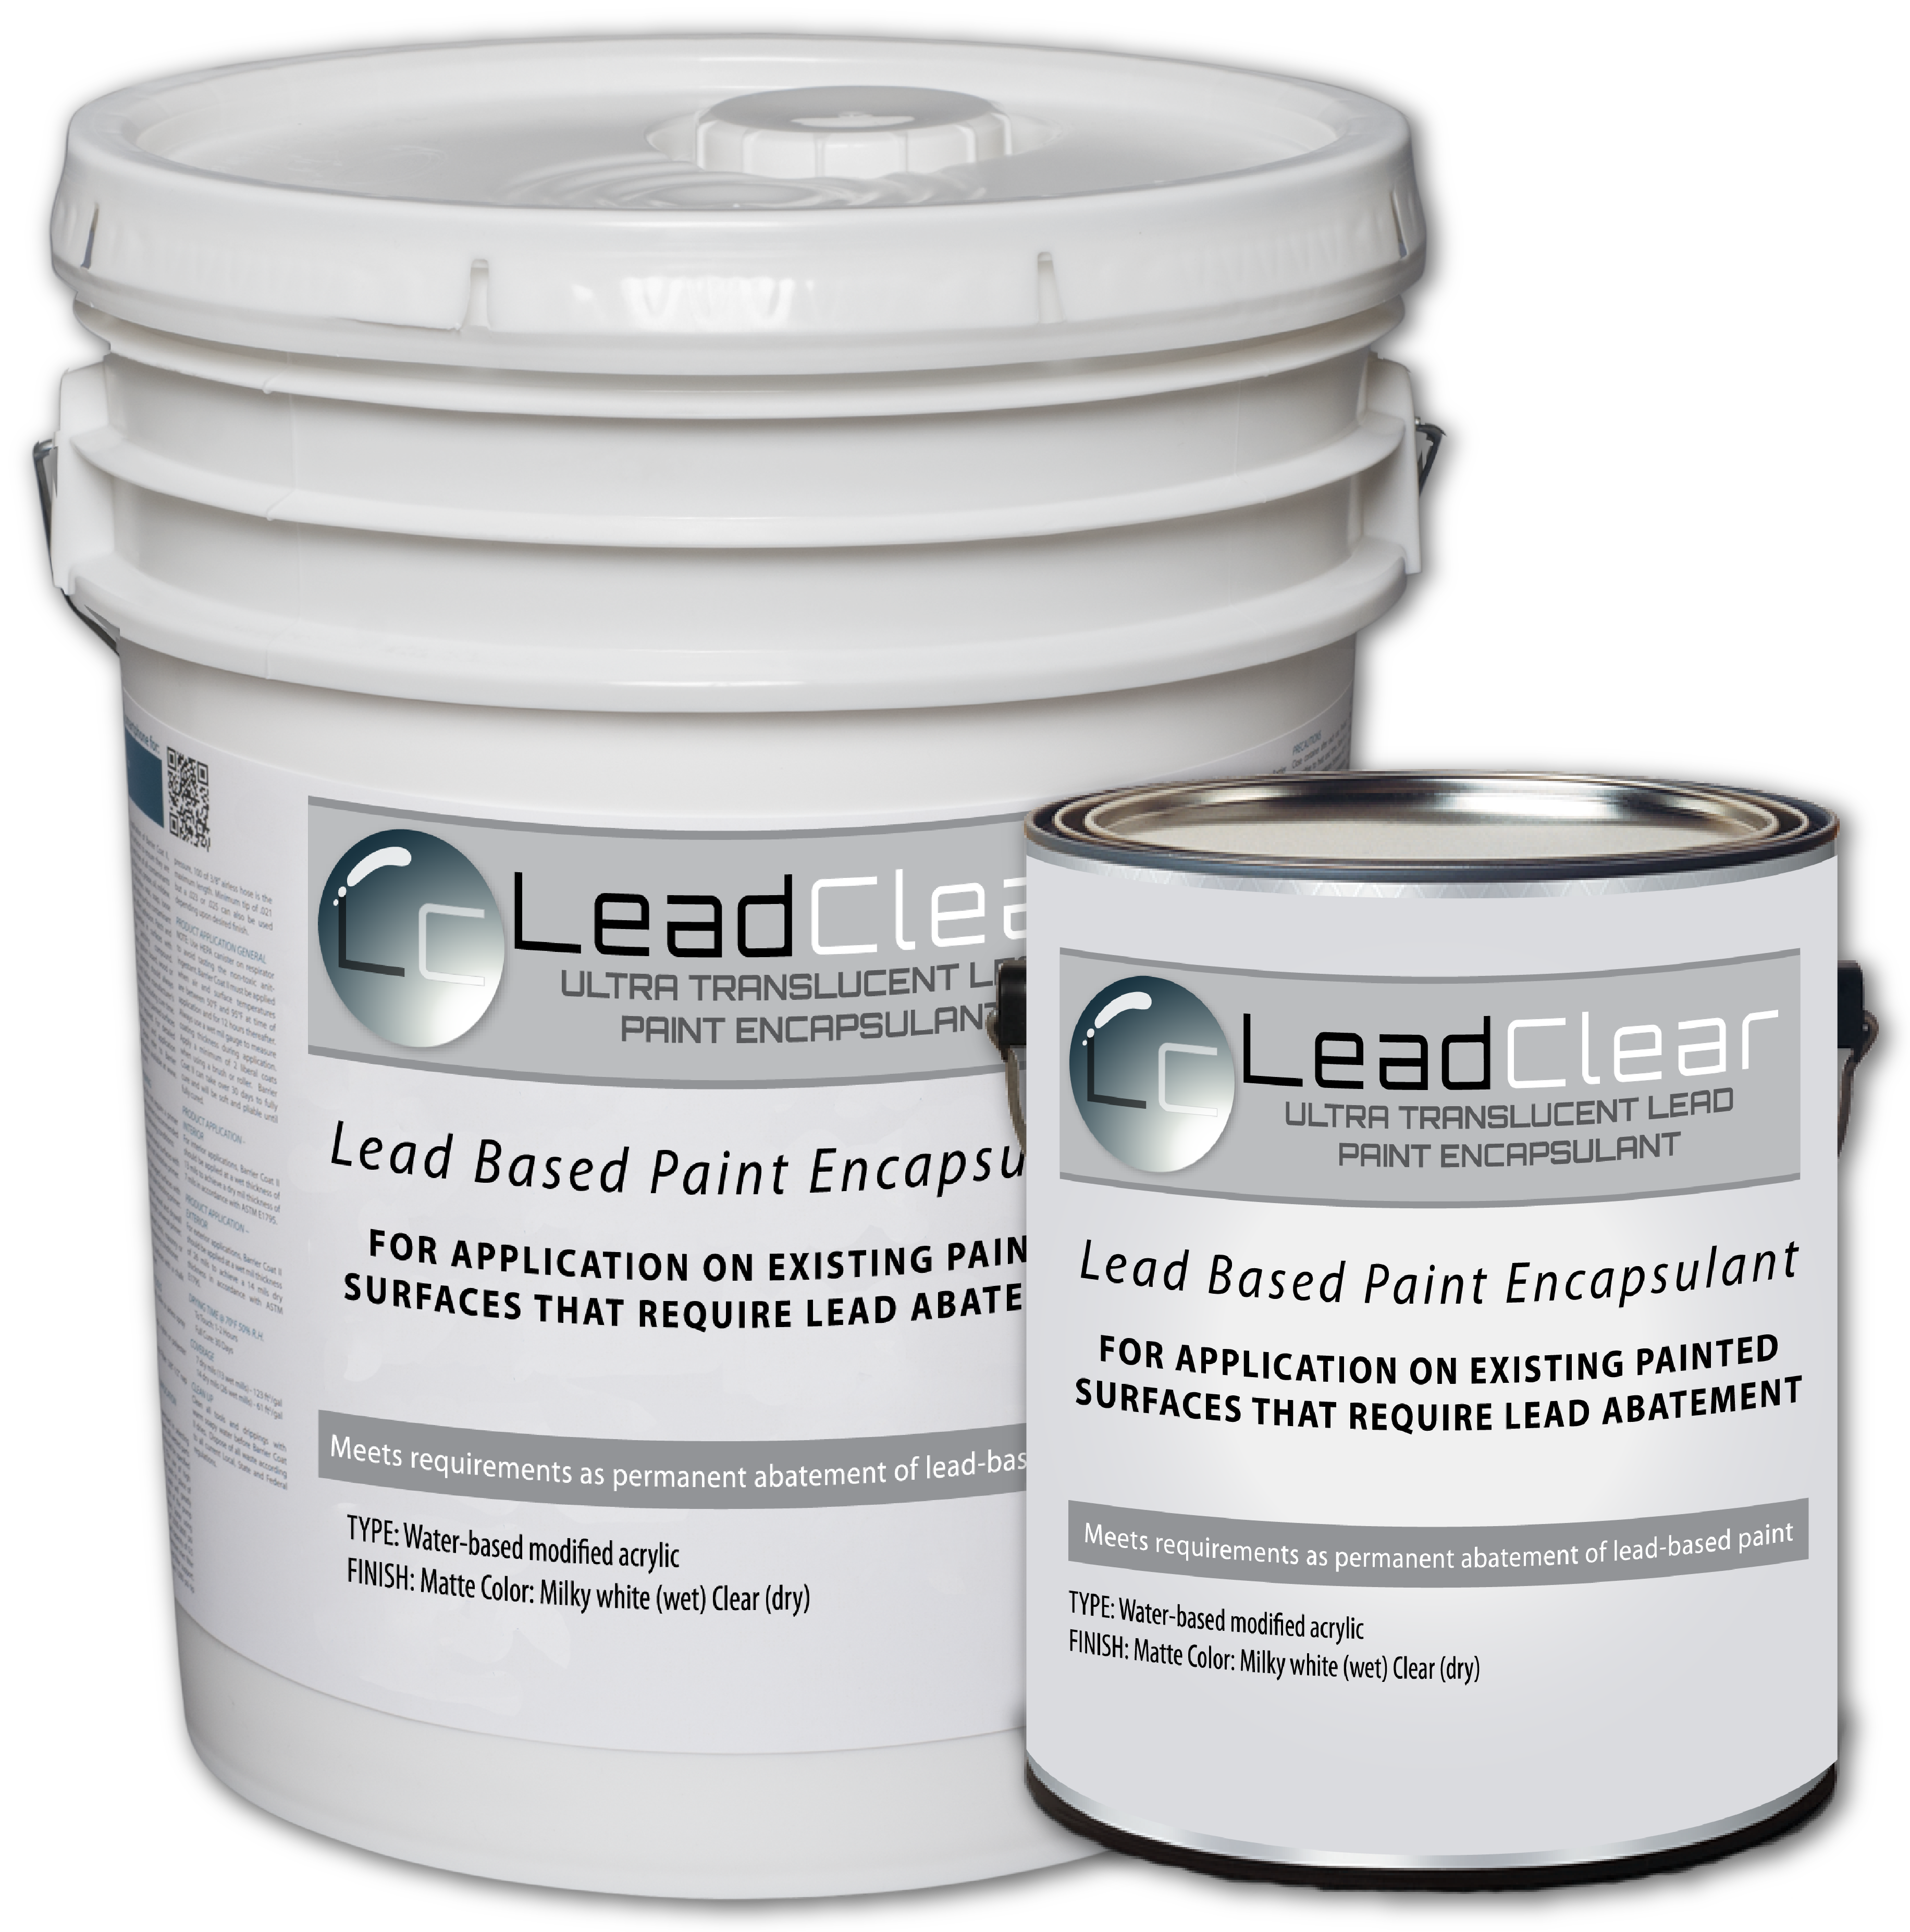 Lead Based Paint Encapsulant Coat Online